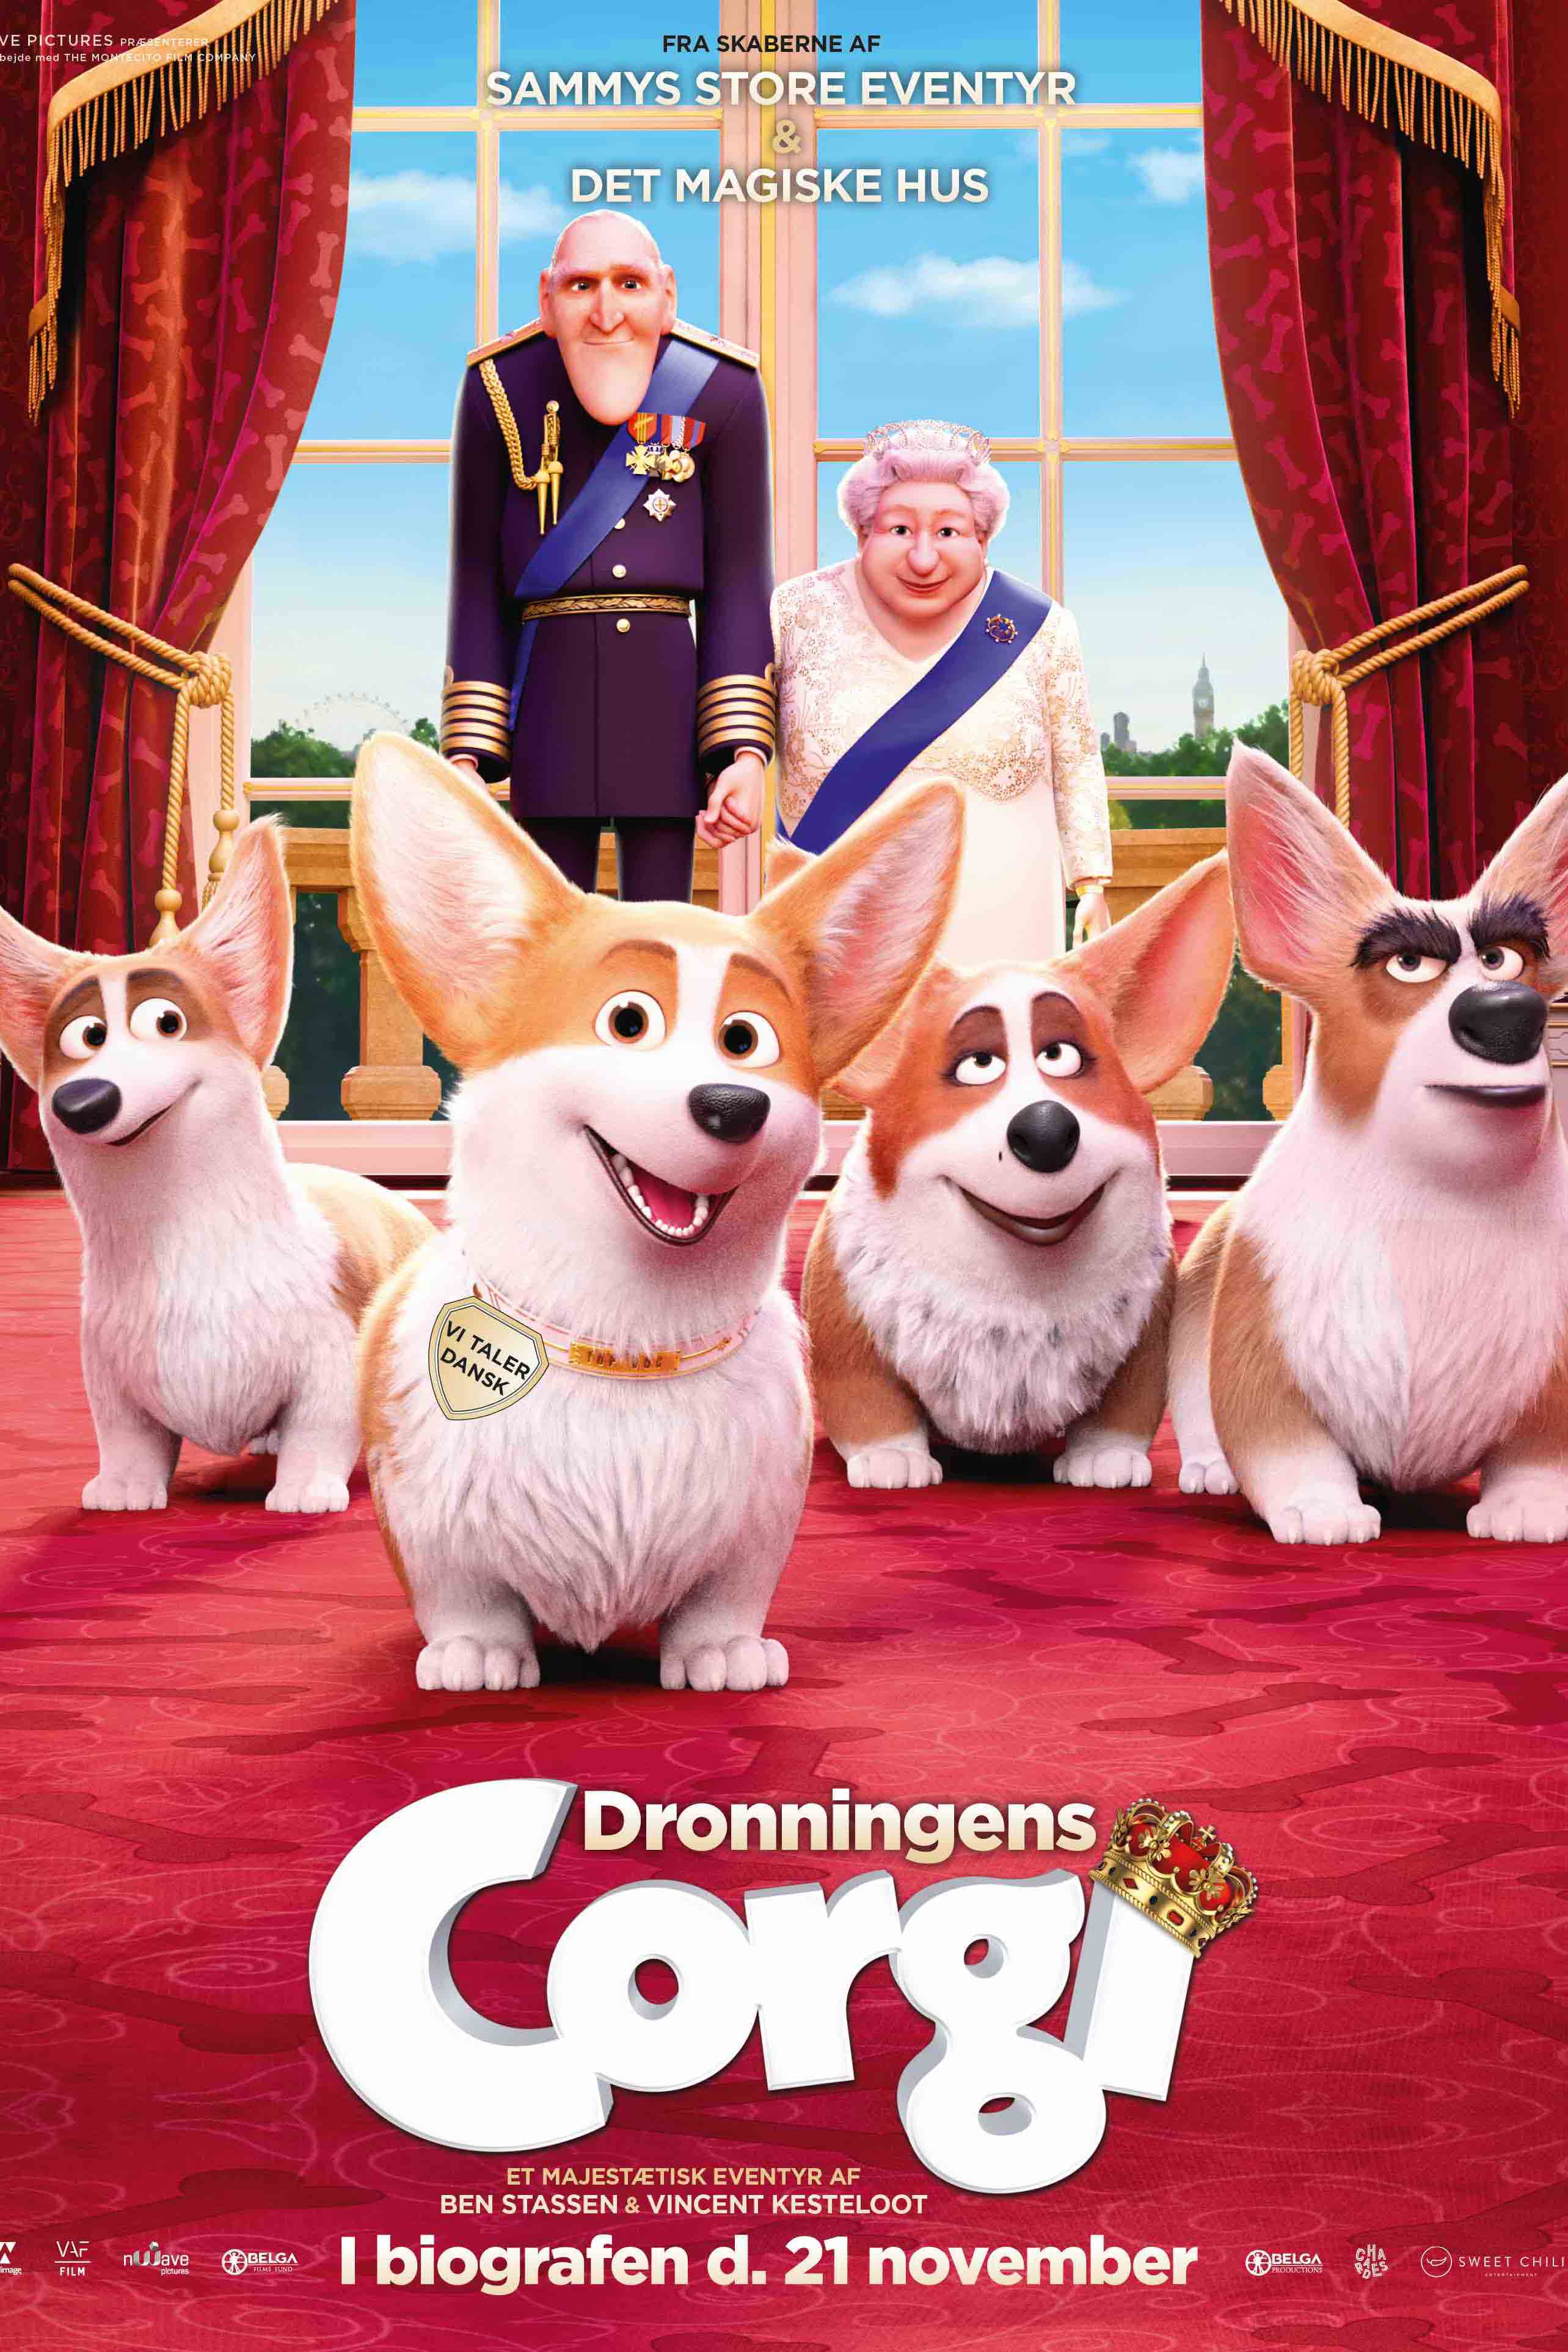 Dronningens Nordisk Film Biografer